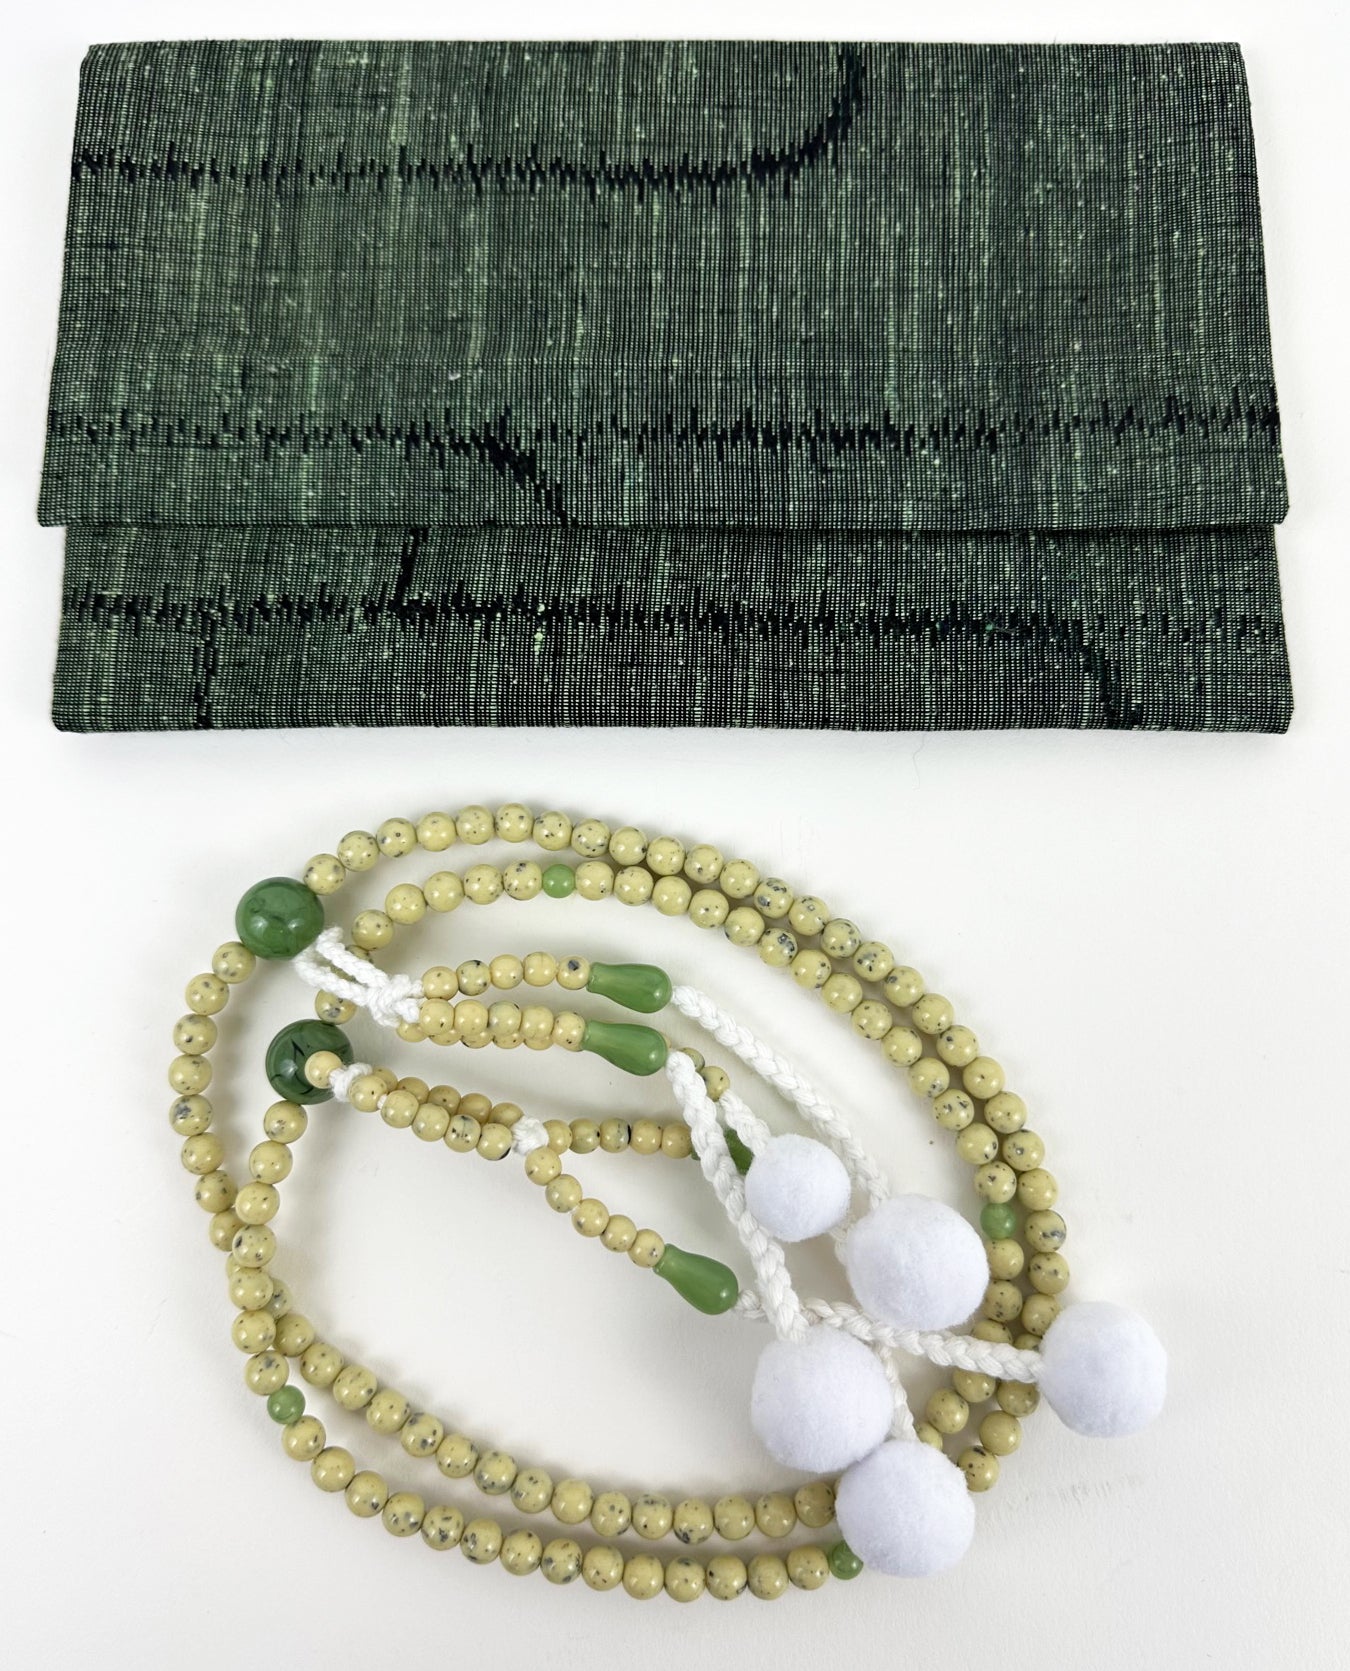 Faux Linden Wood Beads with Jade Beads Set - Large Beads (Large Kimono Beads Case)